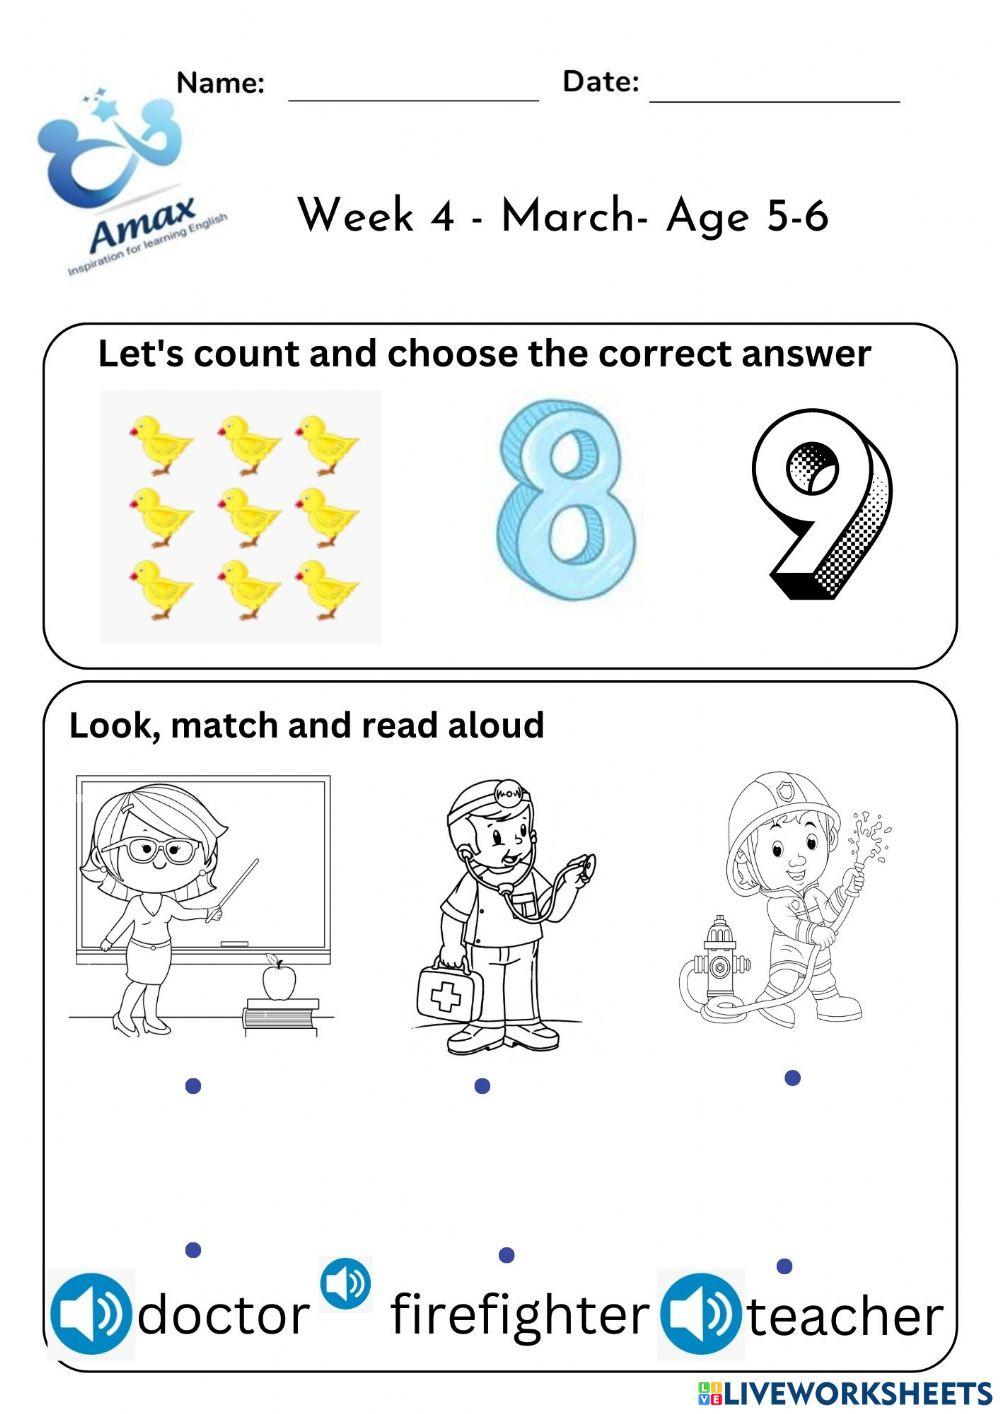 Week 4 - March ( Age 5-6)